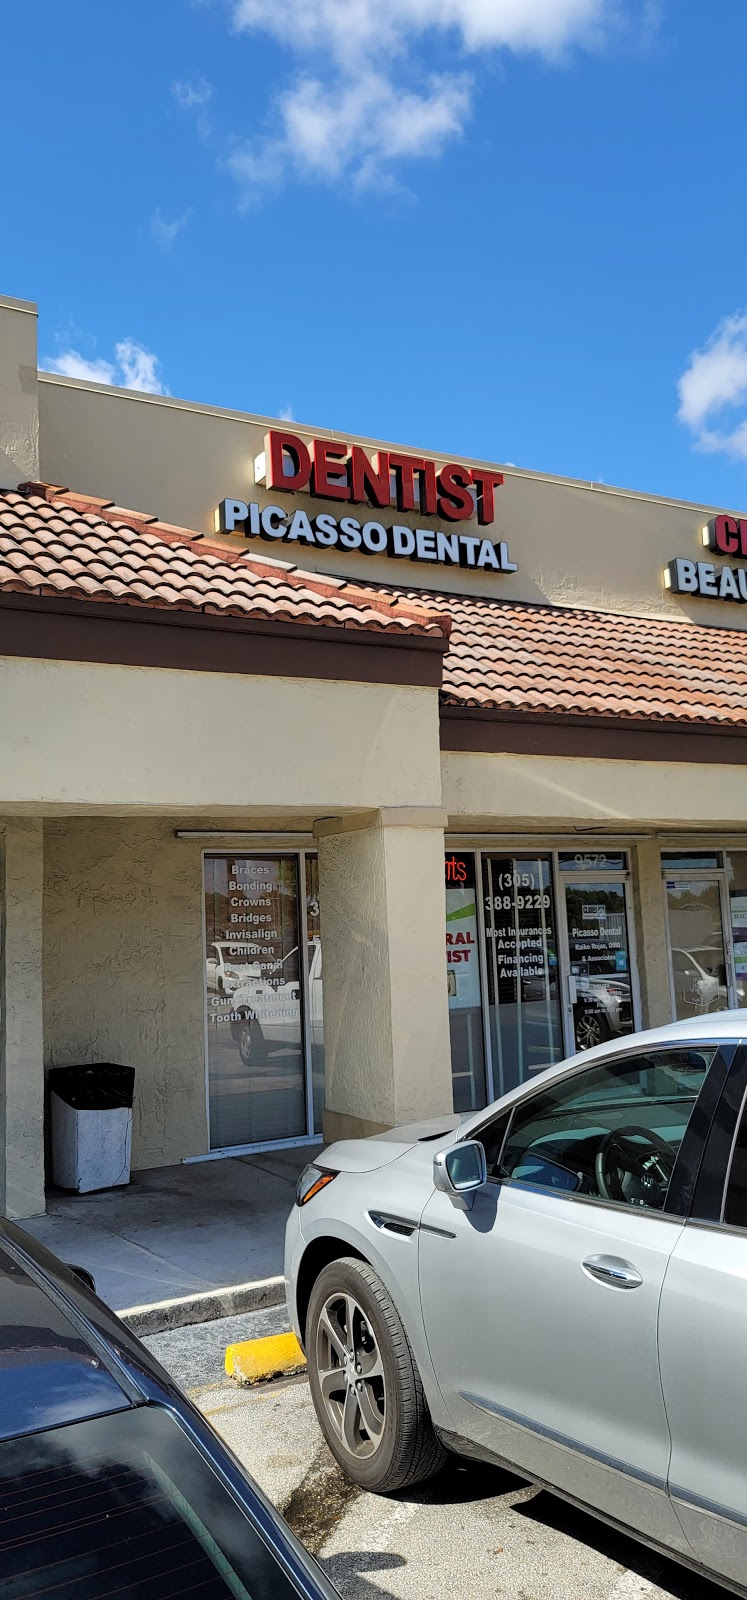 Picasso Dental, Inc. | 9572 SW 137th Ave, Miami, FL 33186 | Phone: (305) 388-9229